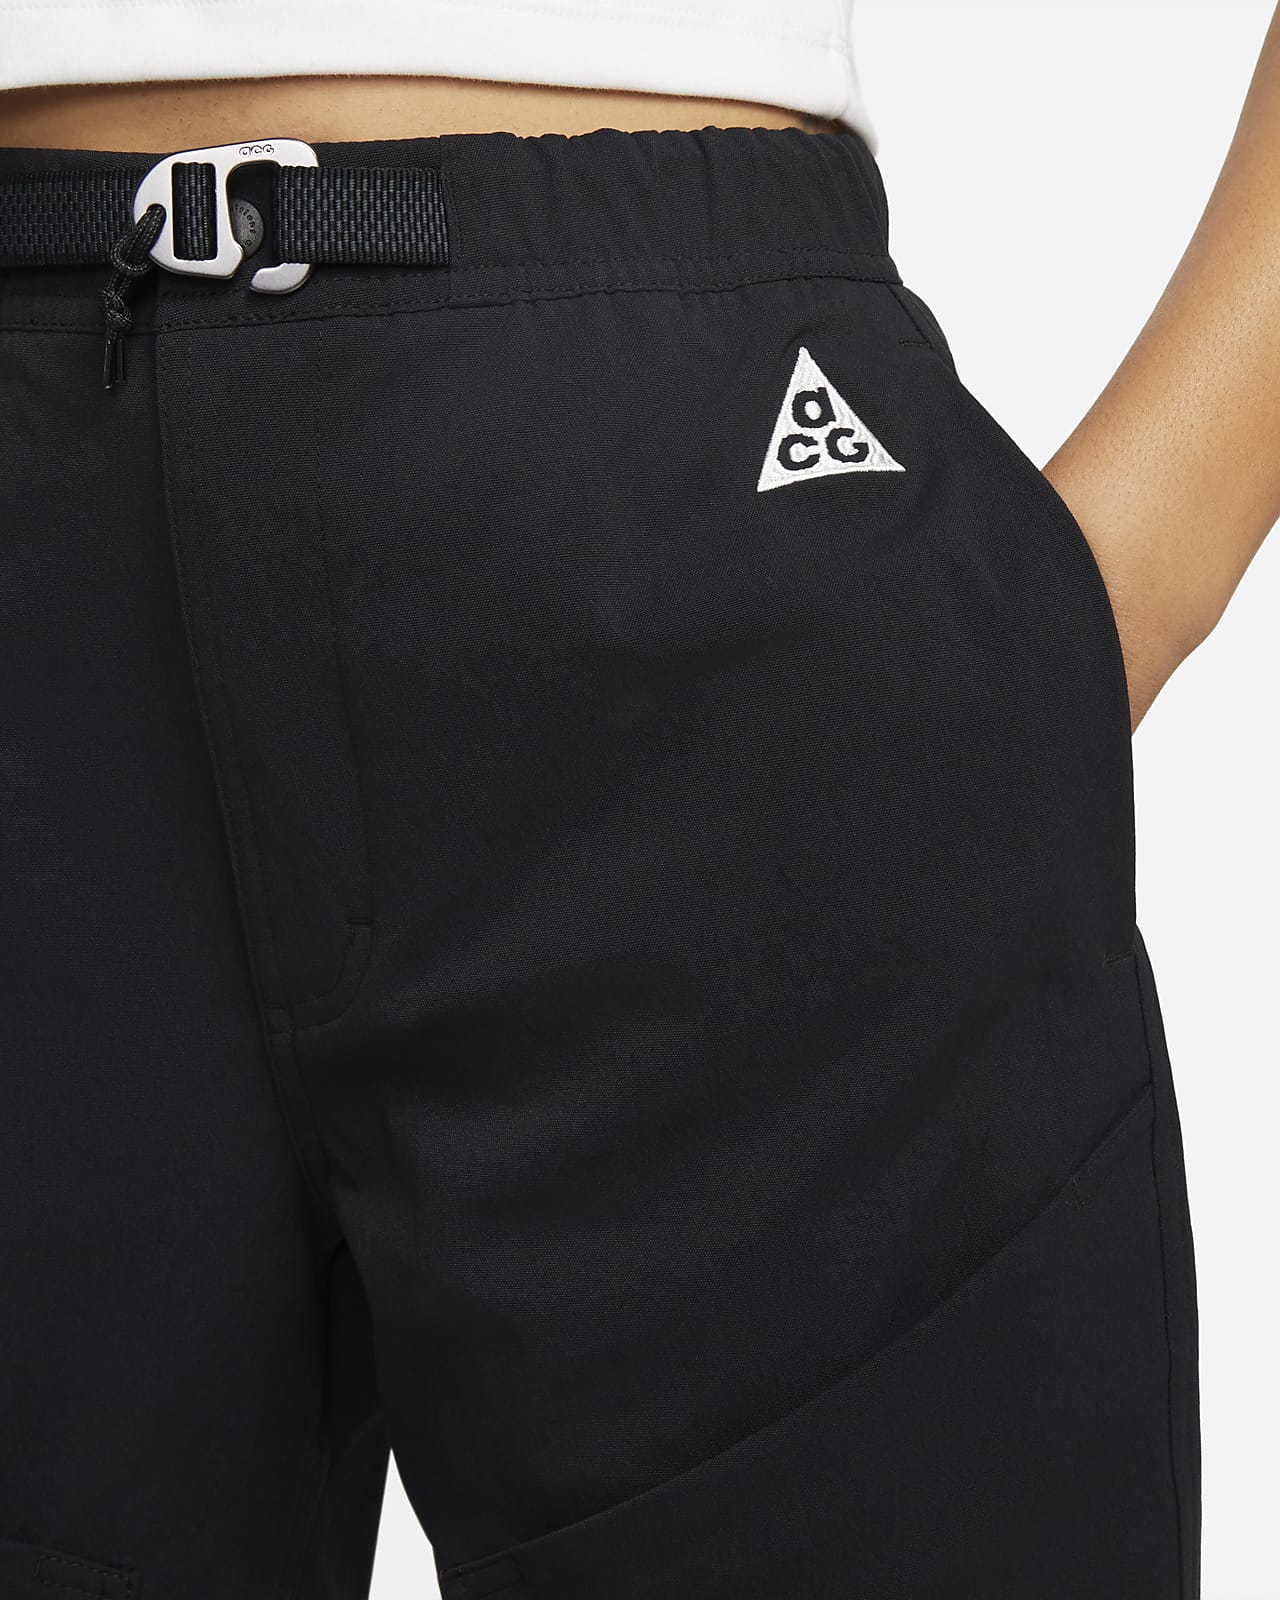 Nike Womens ACG Dri-FIT Pants (Black/Summit White) – Concepts